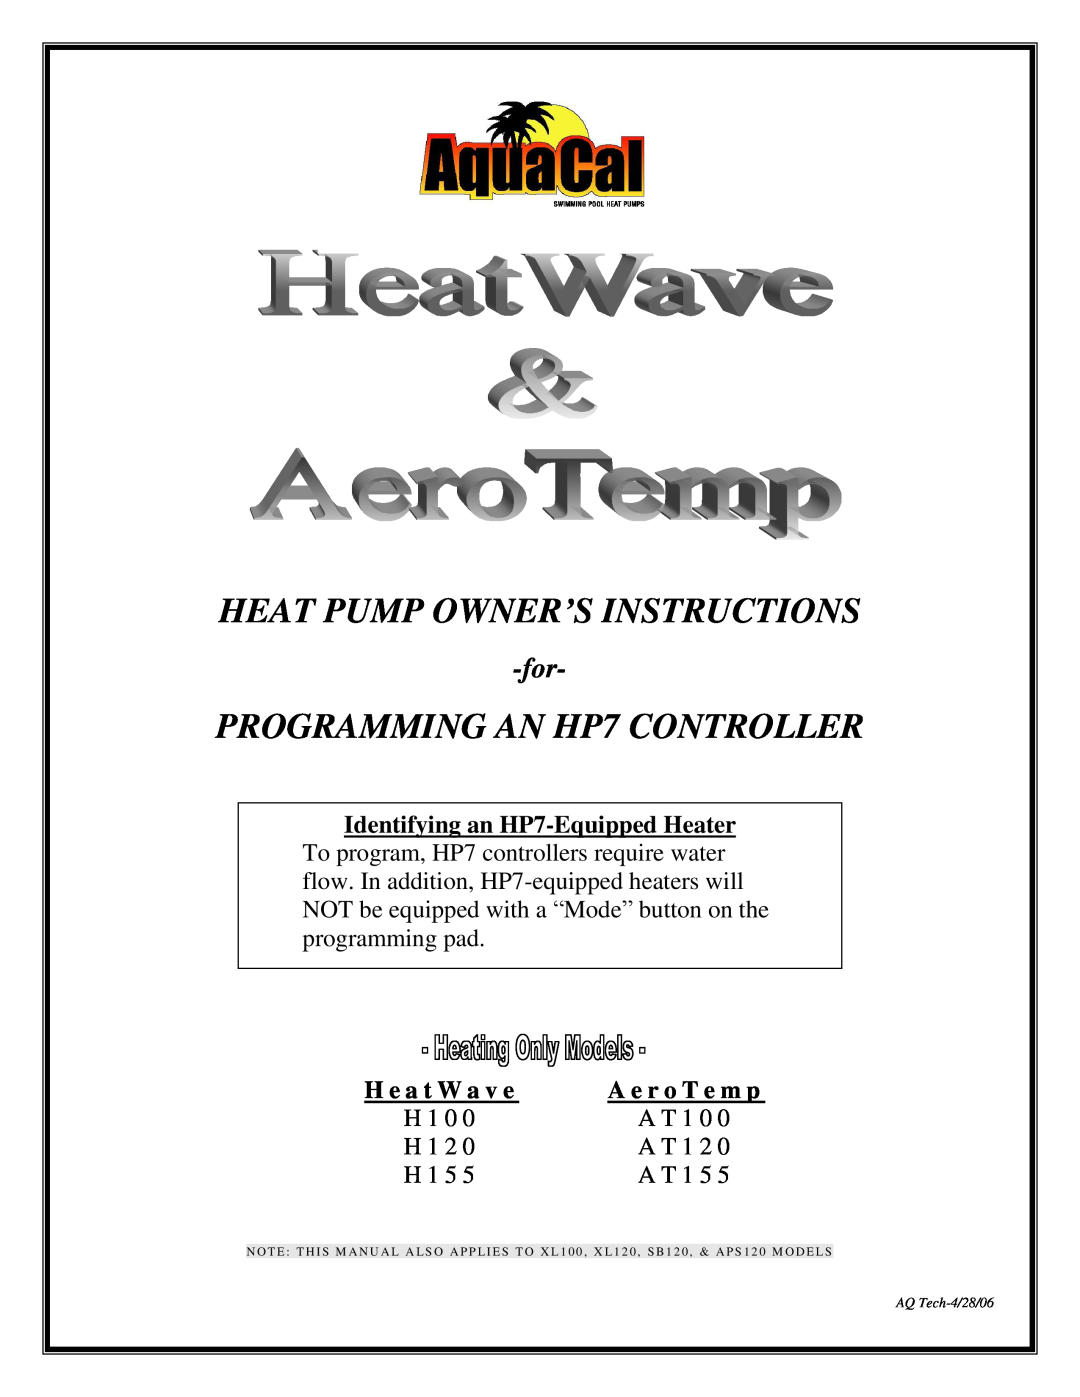 Aquacal 120 Heat Pump Owner’S Instructions, PROGRAMMING AN HP7 CONTROLLER, H e a t W a v e, A e r o T e m p, H 1 0, H 1 2 